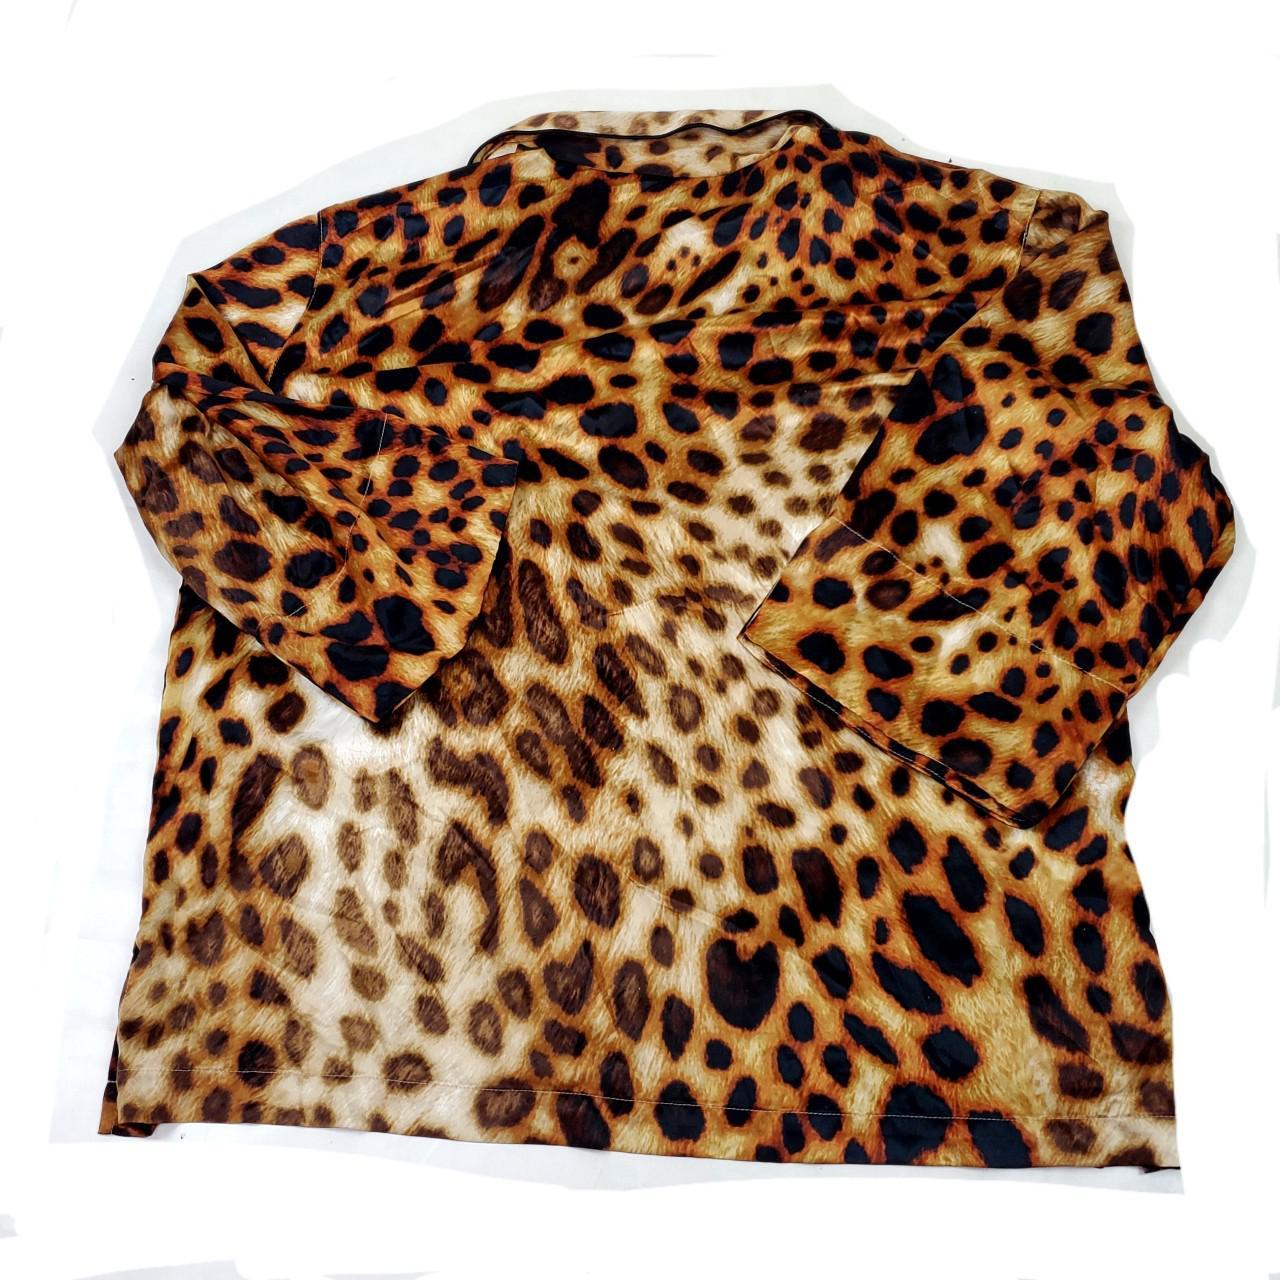 Product Image 3 - Satin cheetah sleep set. 

If